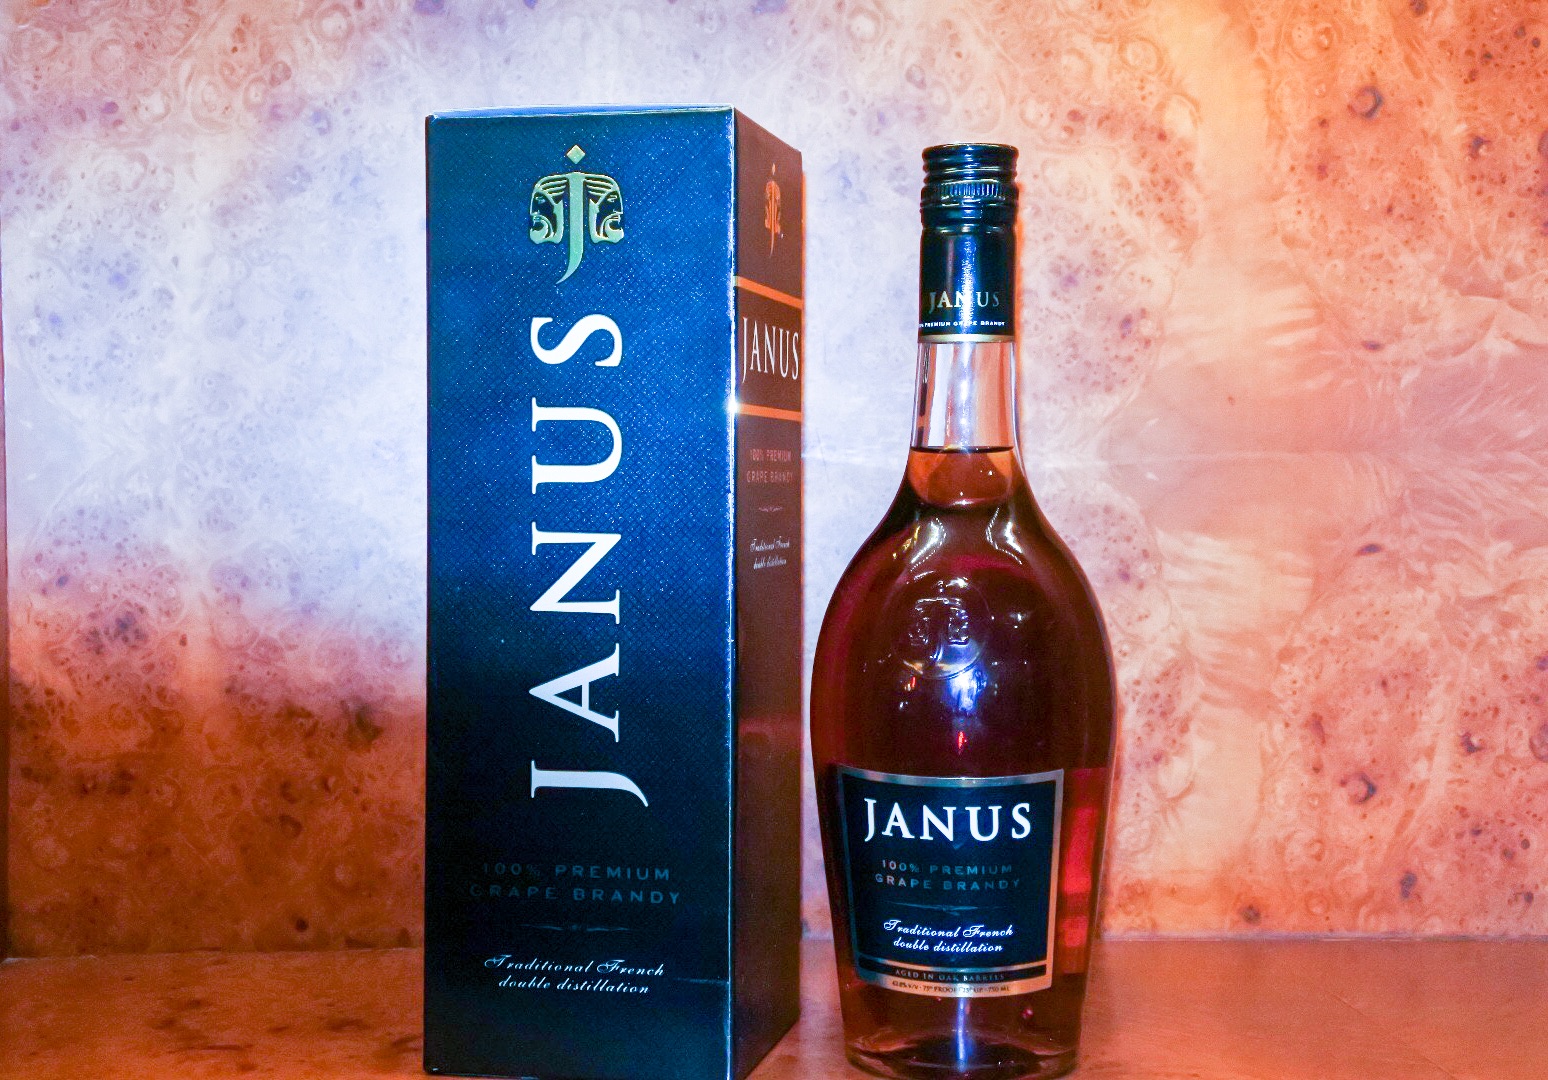 Janus Brandy on display